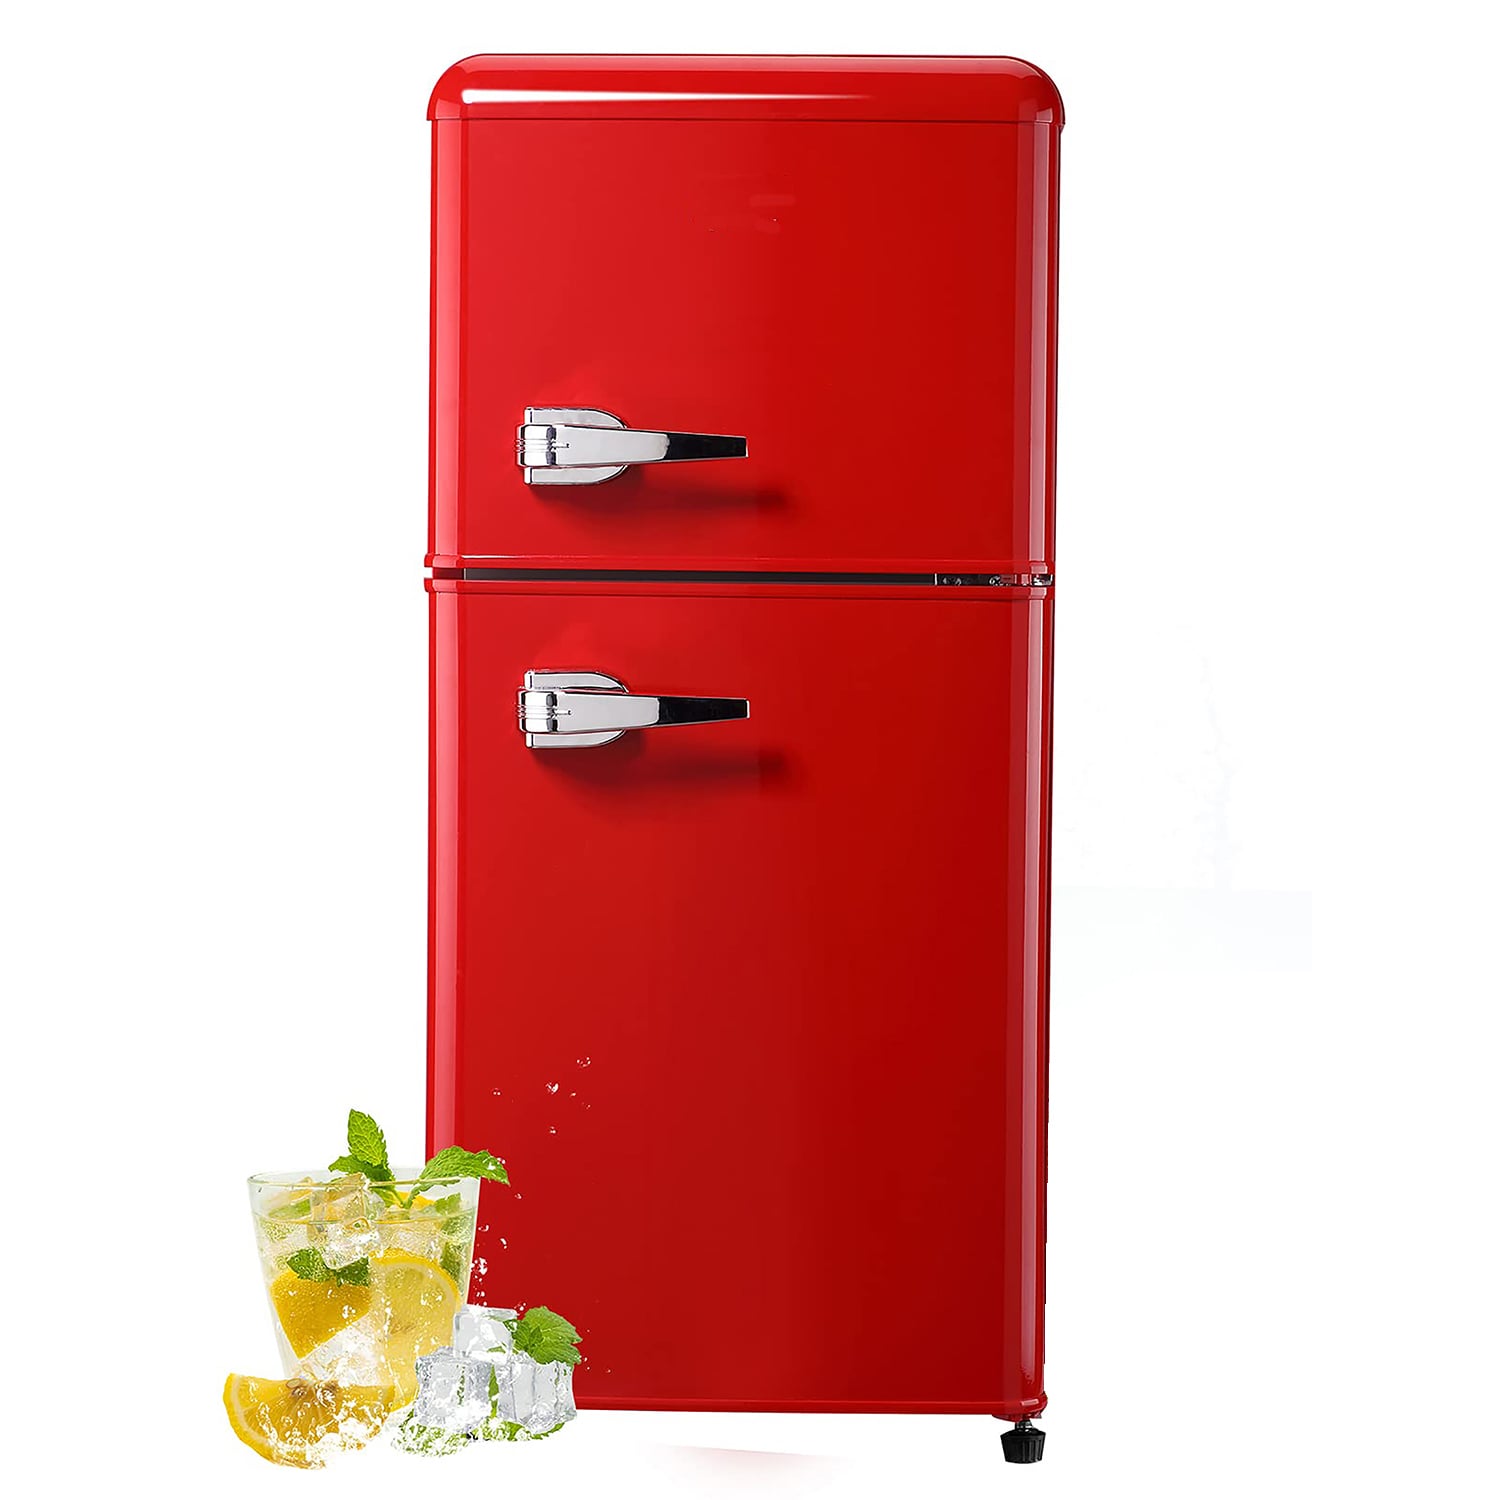 Red Refrigerators - Bed Bath & Beyond